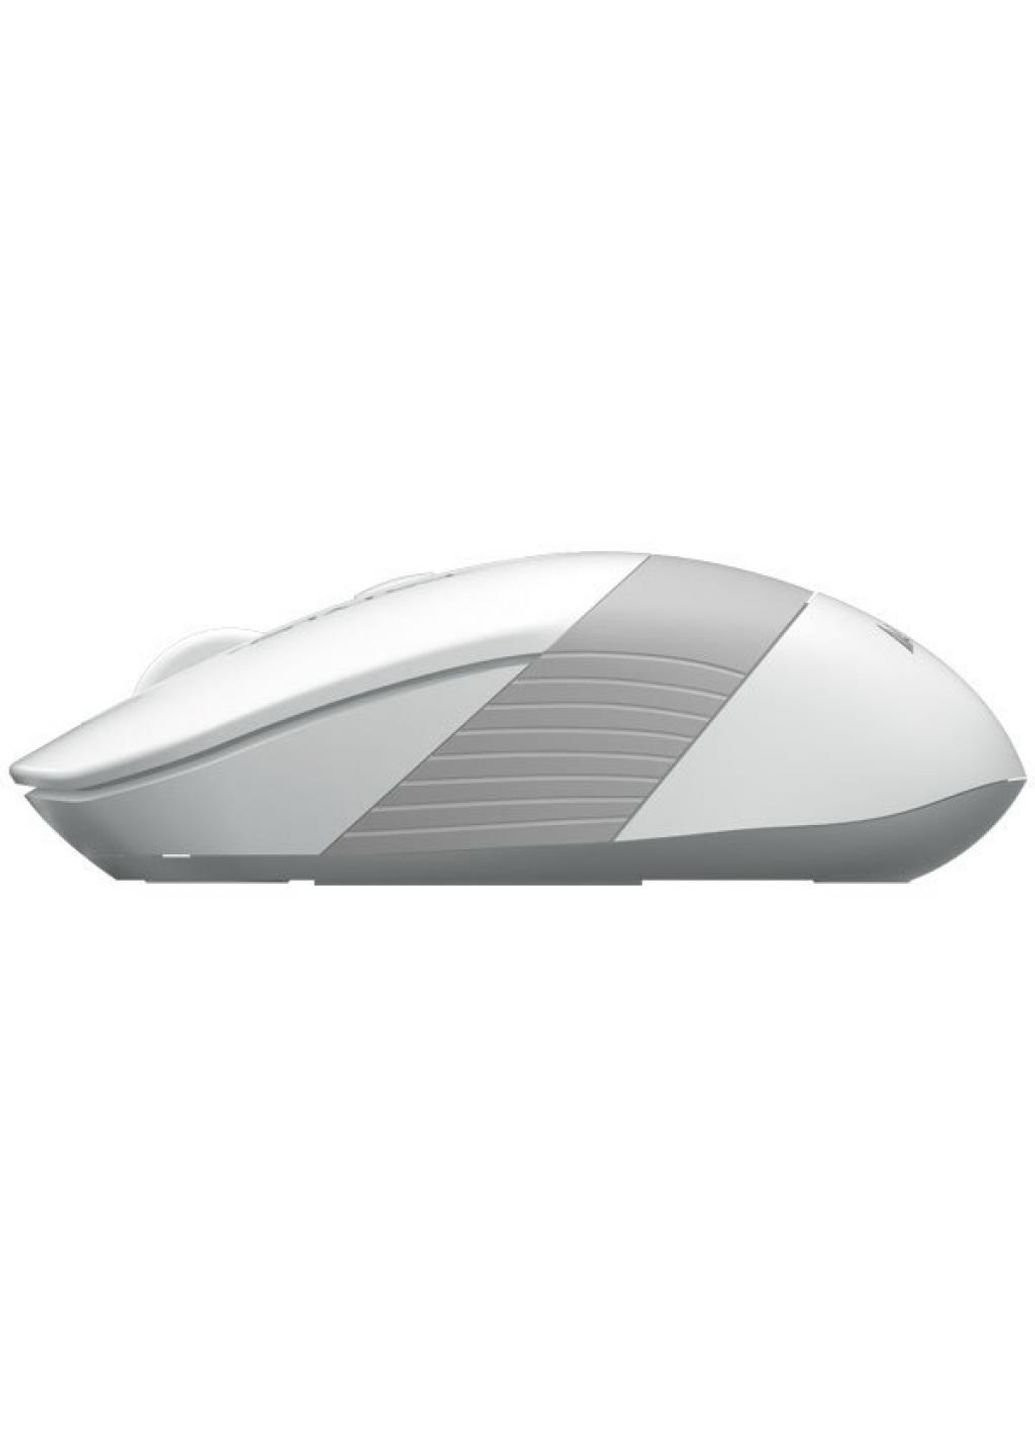 Мышка FG10 White A4Tech (252632931)